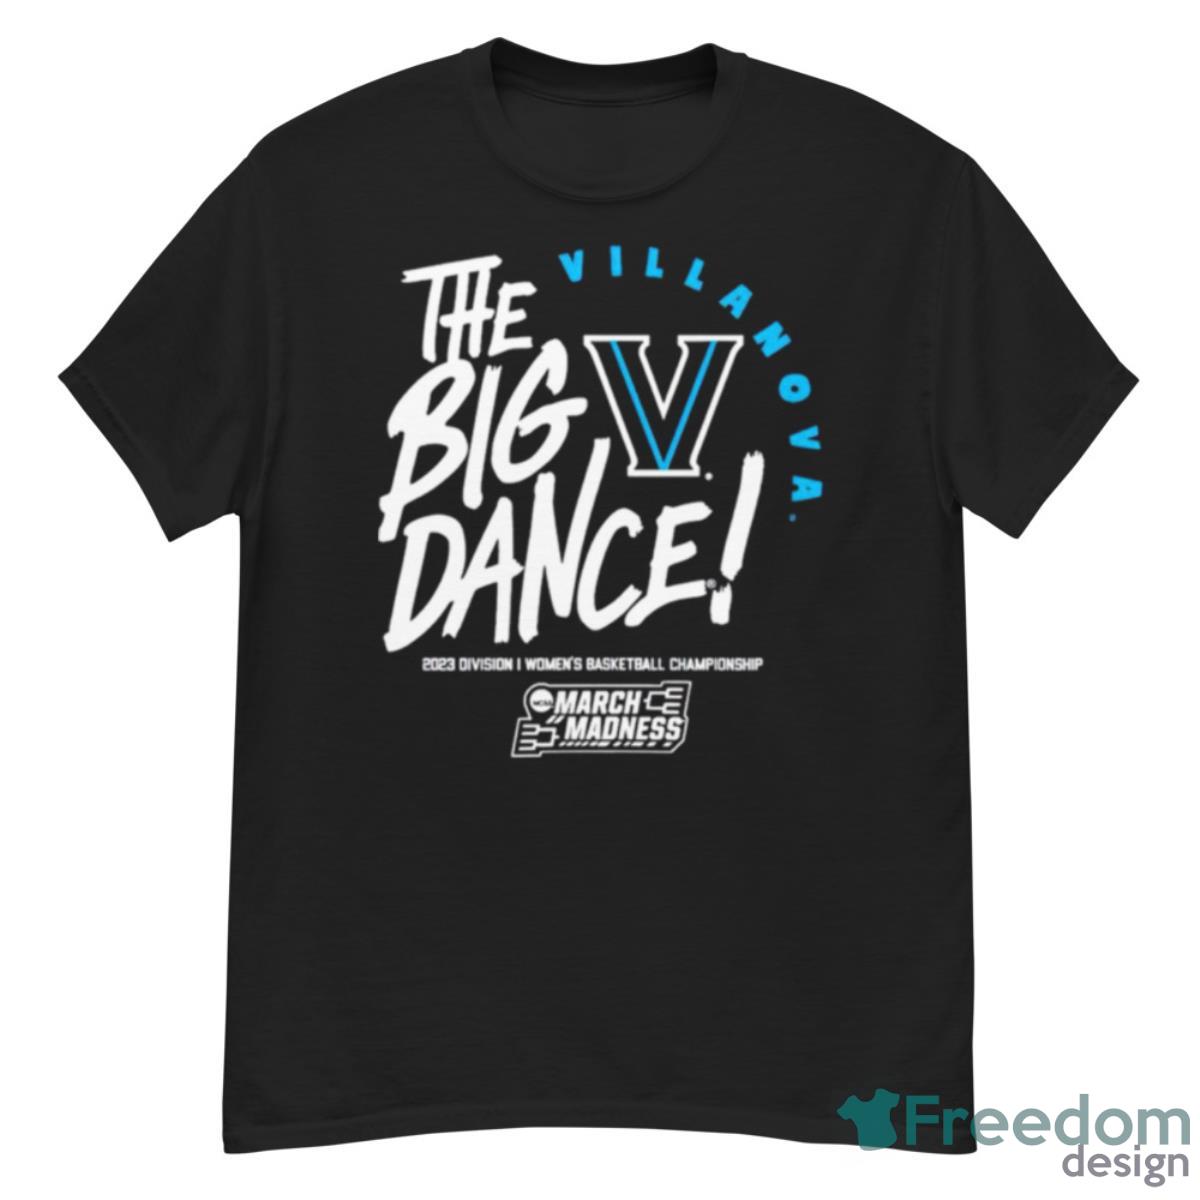 Villanova Wildcats the big dance March Madness 2023 Division women’s basketball championship shirt - G500 Men’s Classic T-Shirt